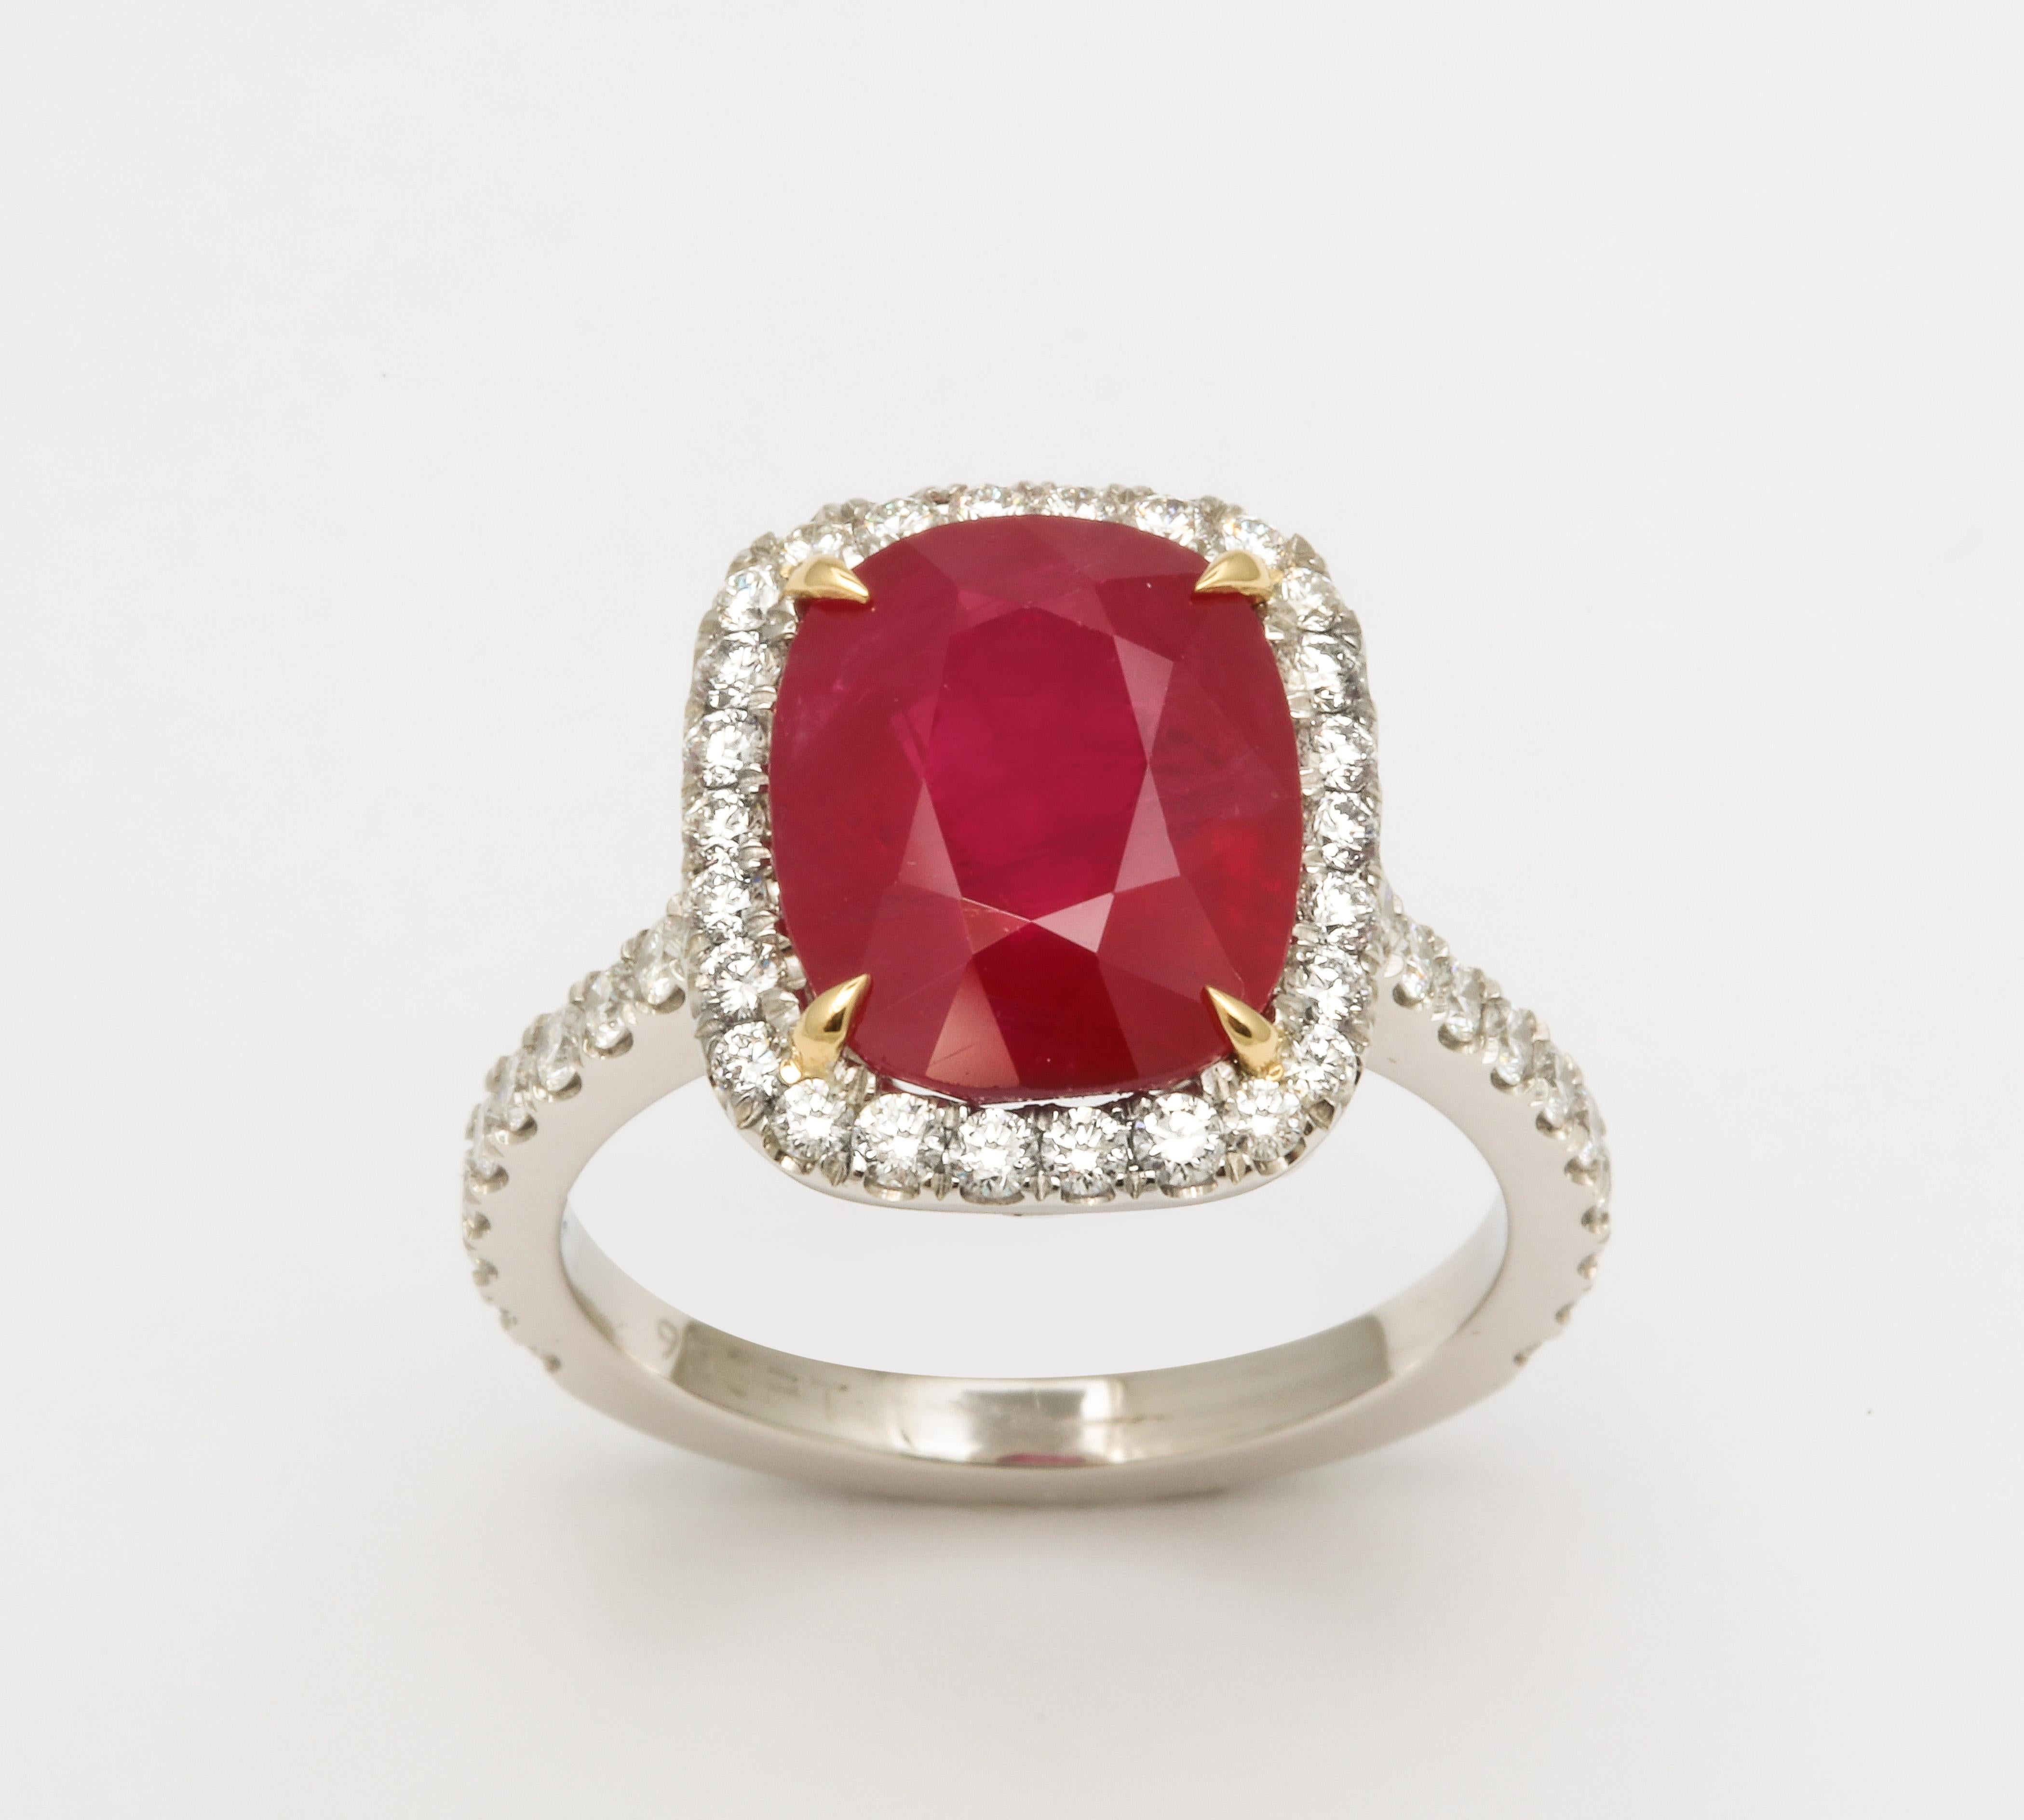 Cushion Cut 5 Carat Burma Ruby and Diamond Ring For Sale